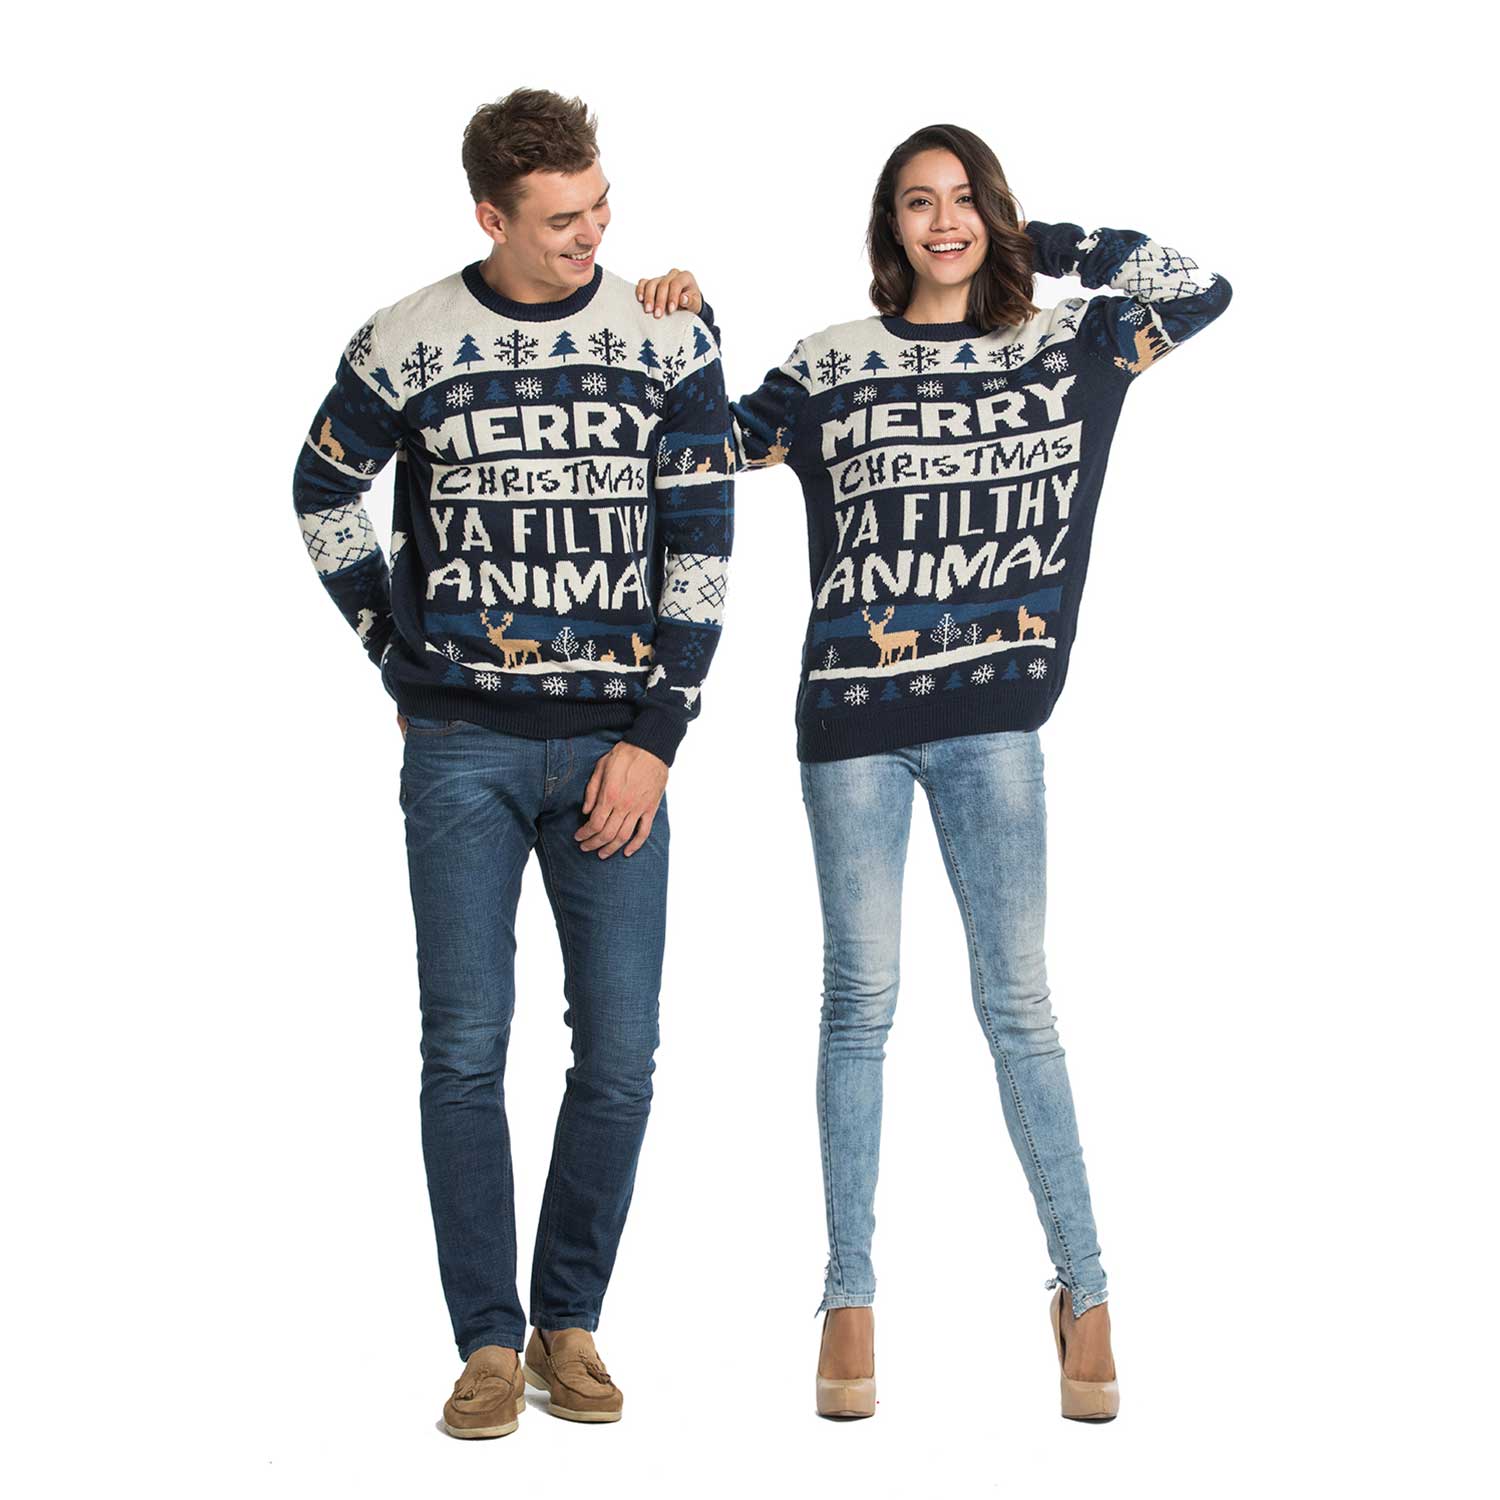 Fair Isle Rude Slogan Mens Funny Christmas Sweater